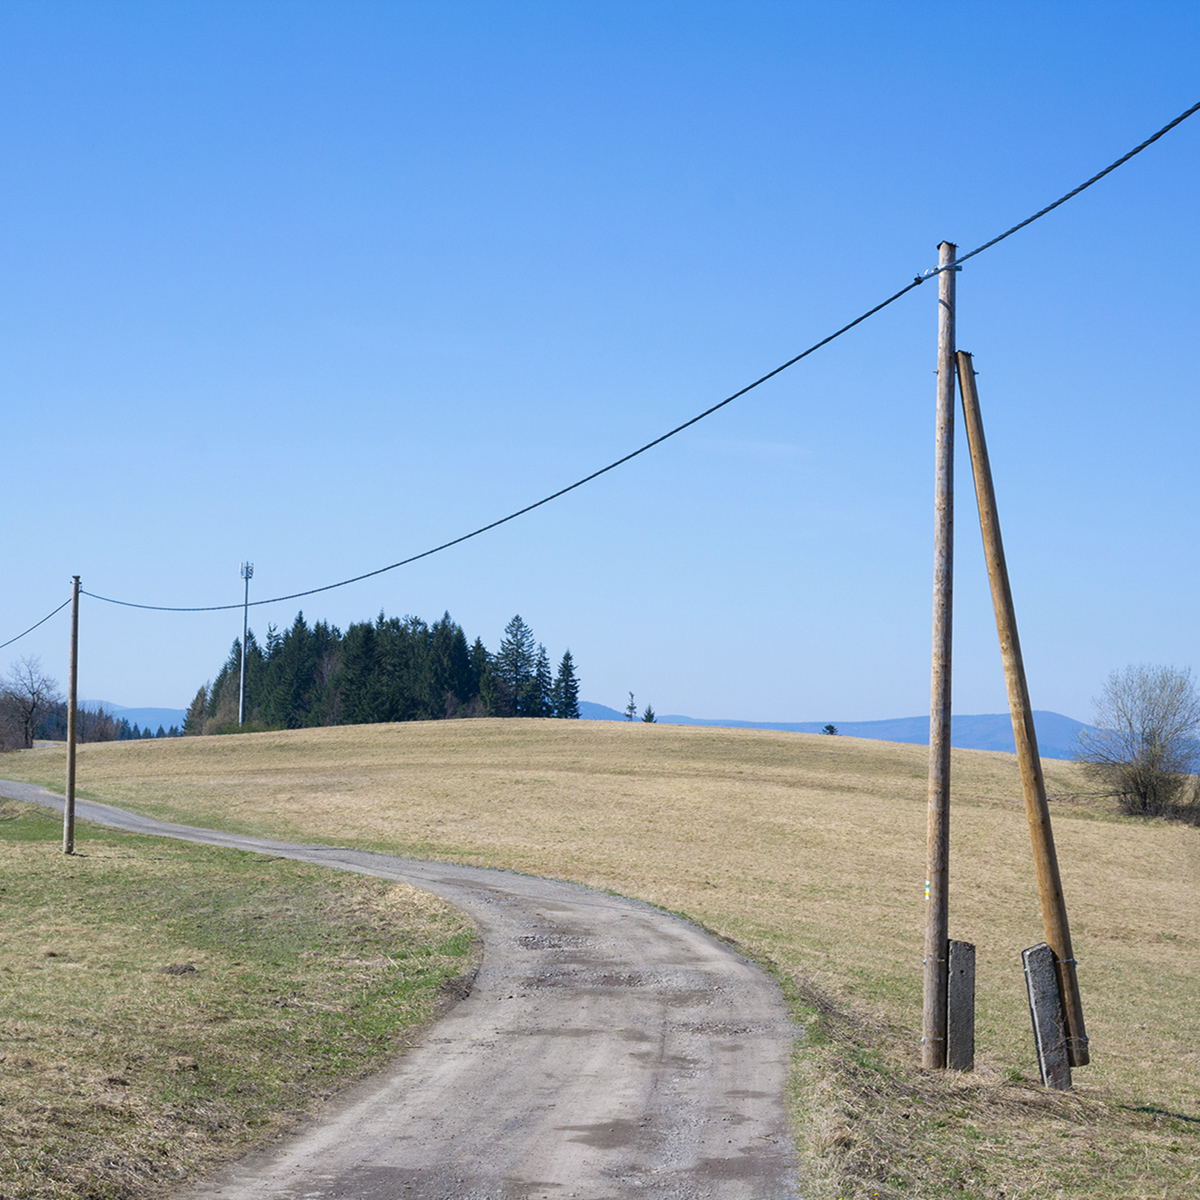 Field path and utility electrical power pole, Komorovský Grúň, Beskid mountains, Czech Republic